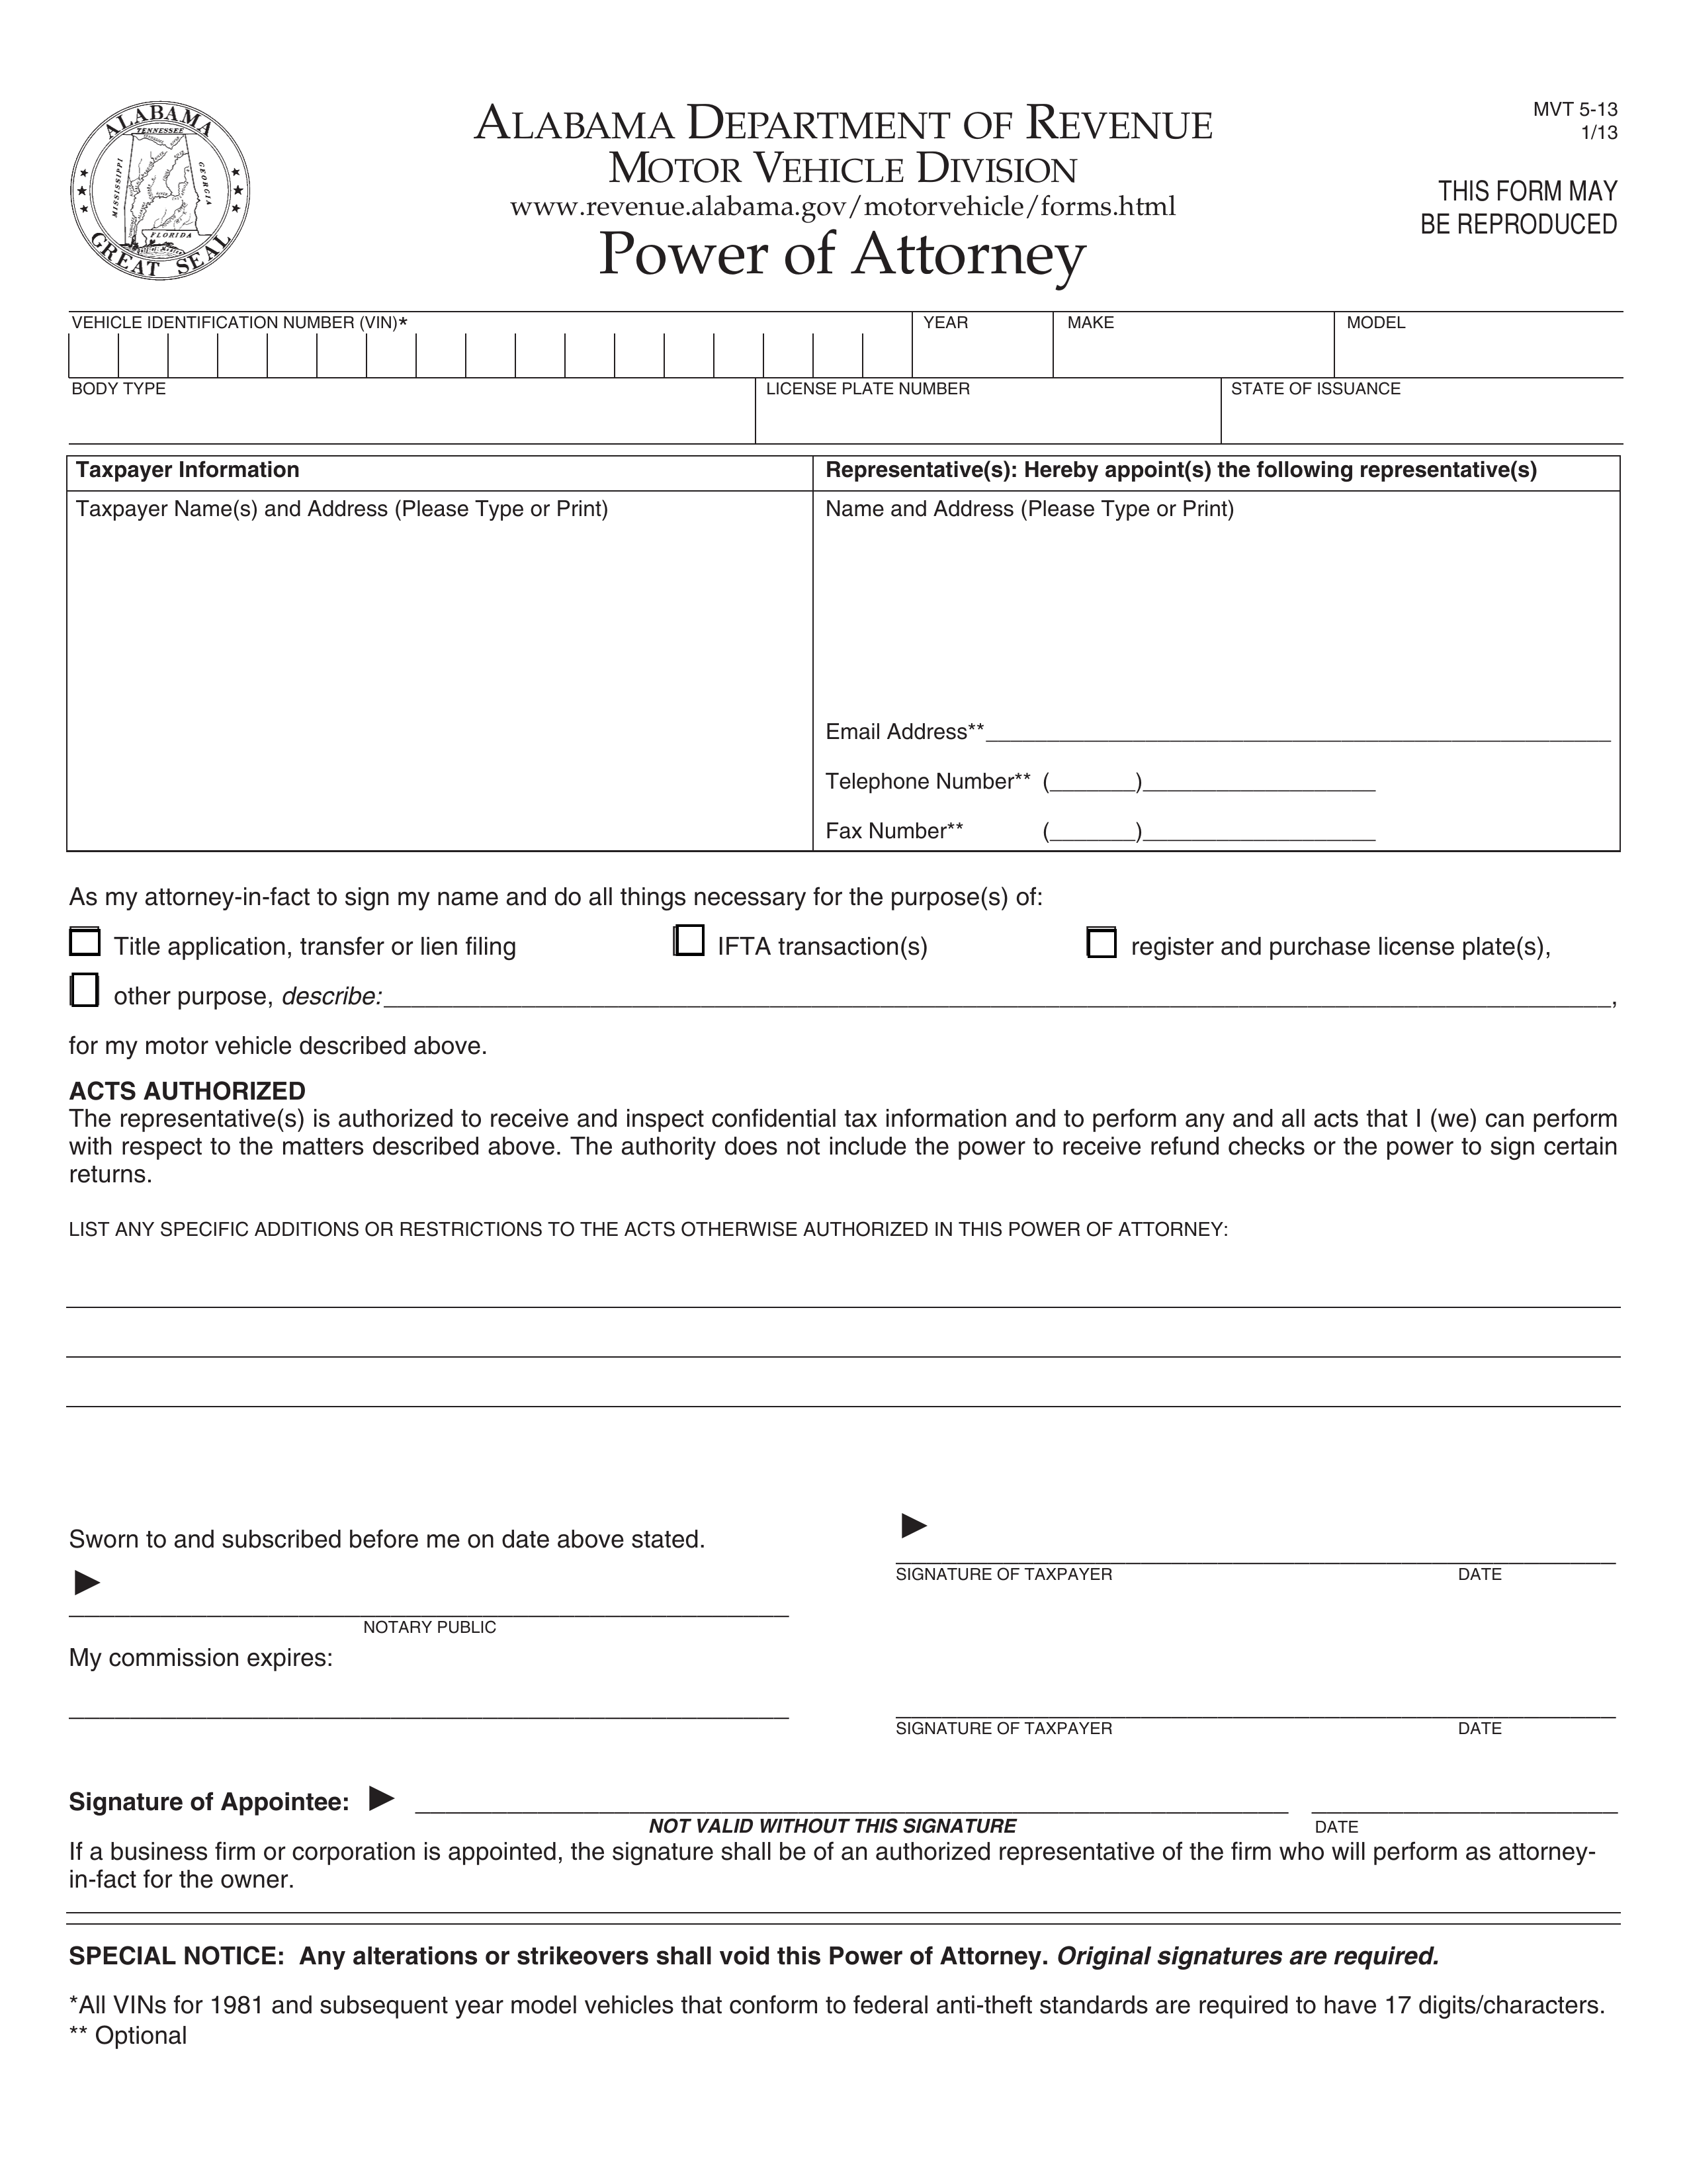 Alabama Motor Vehicle Power Of Attorney Form MVT 5 13 